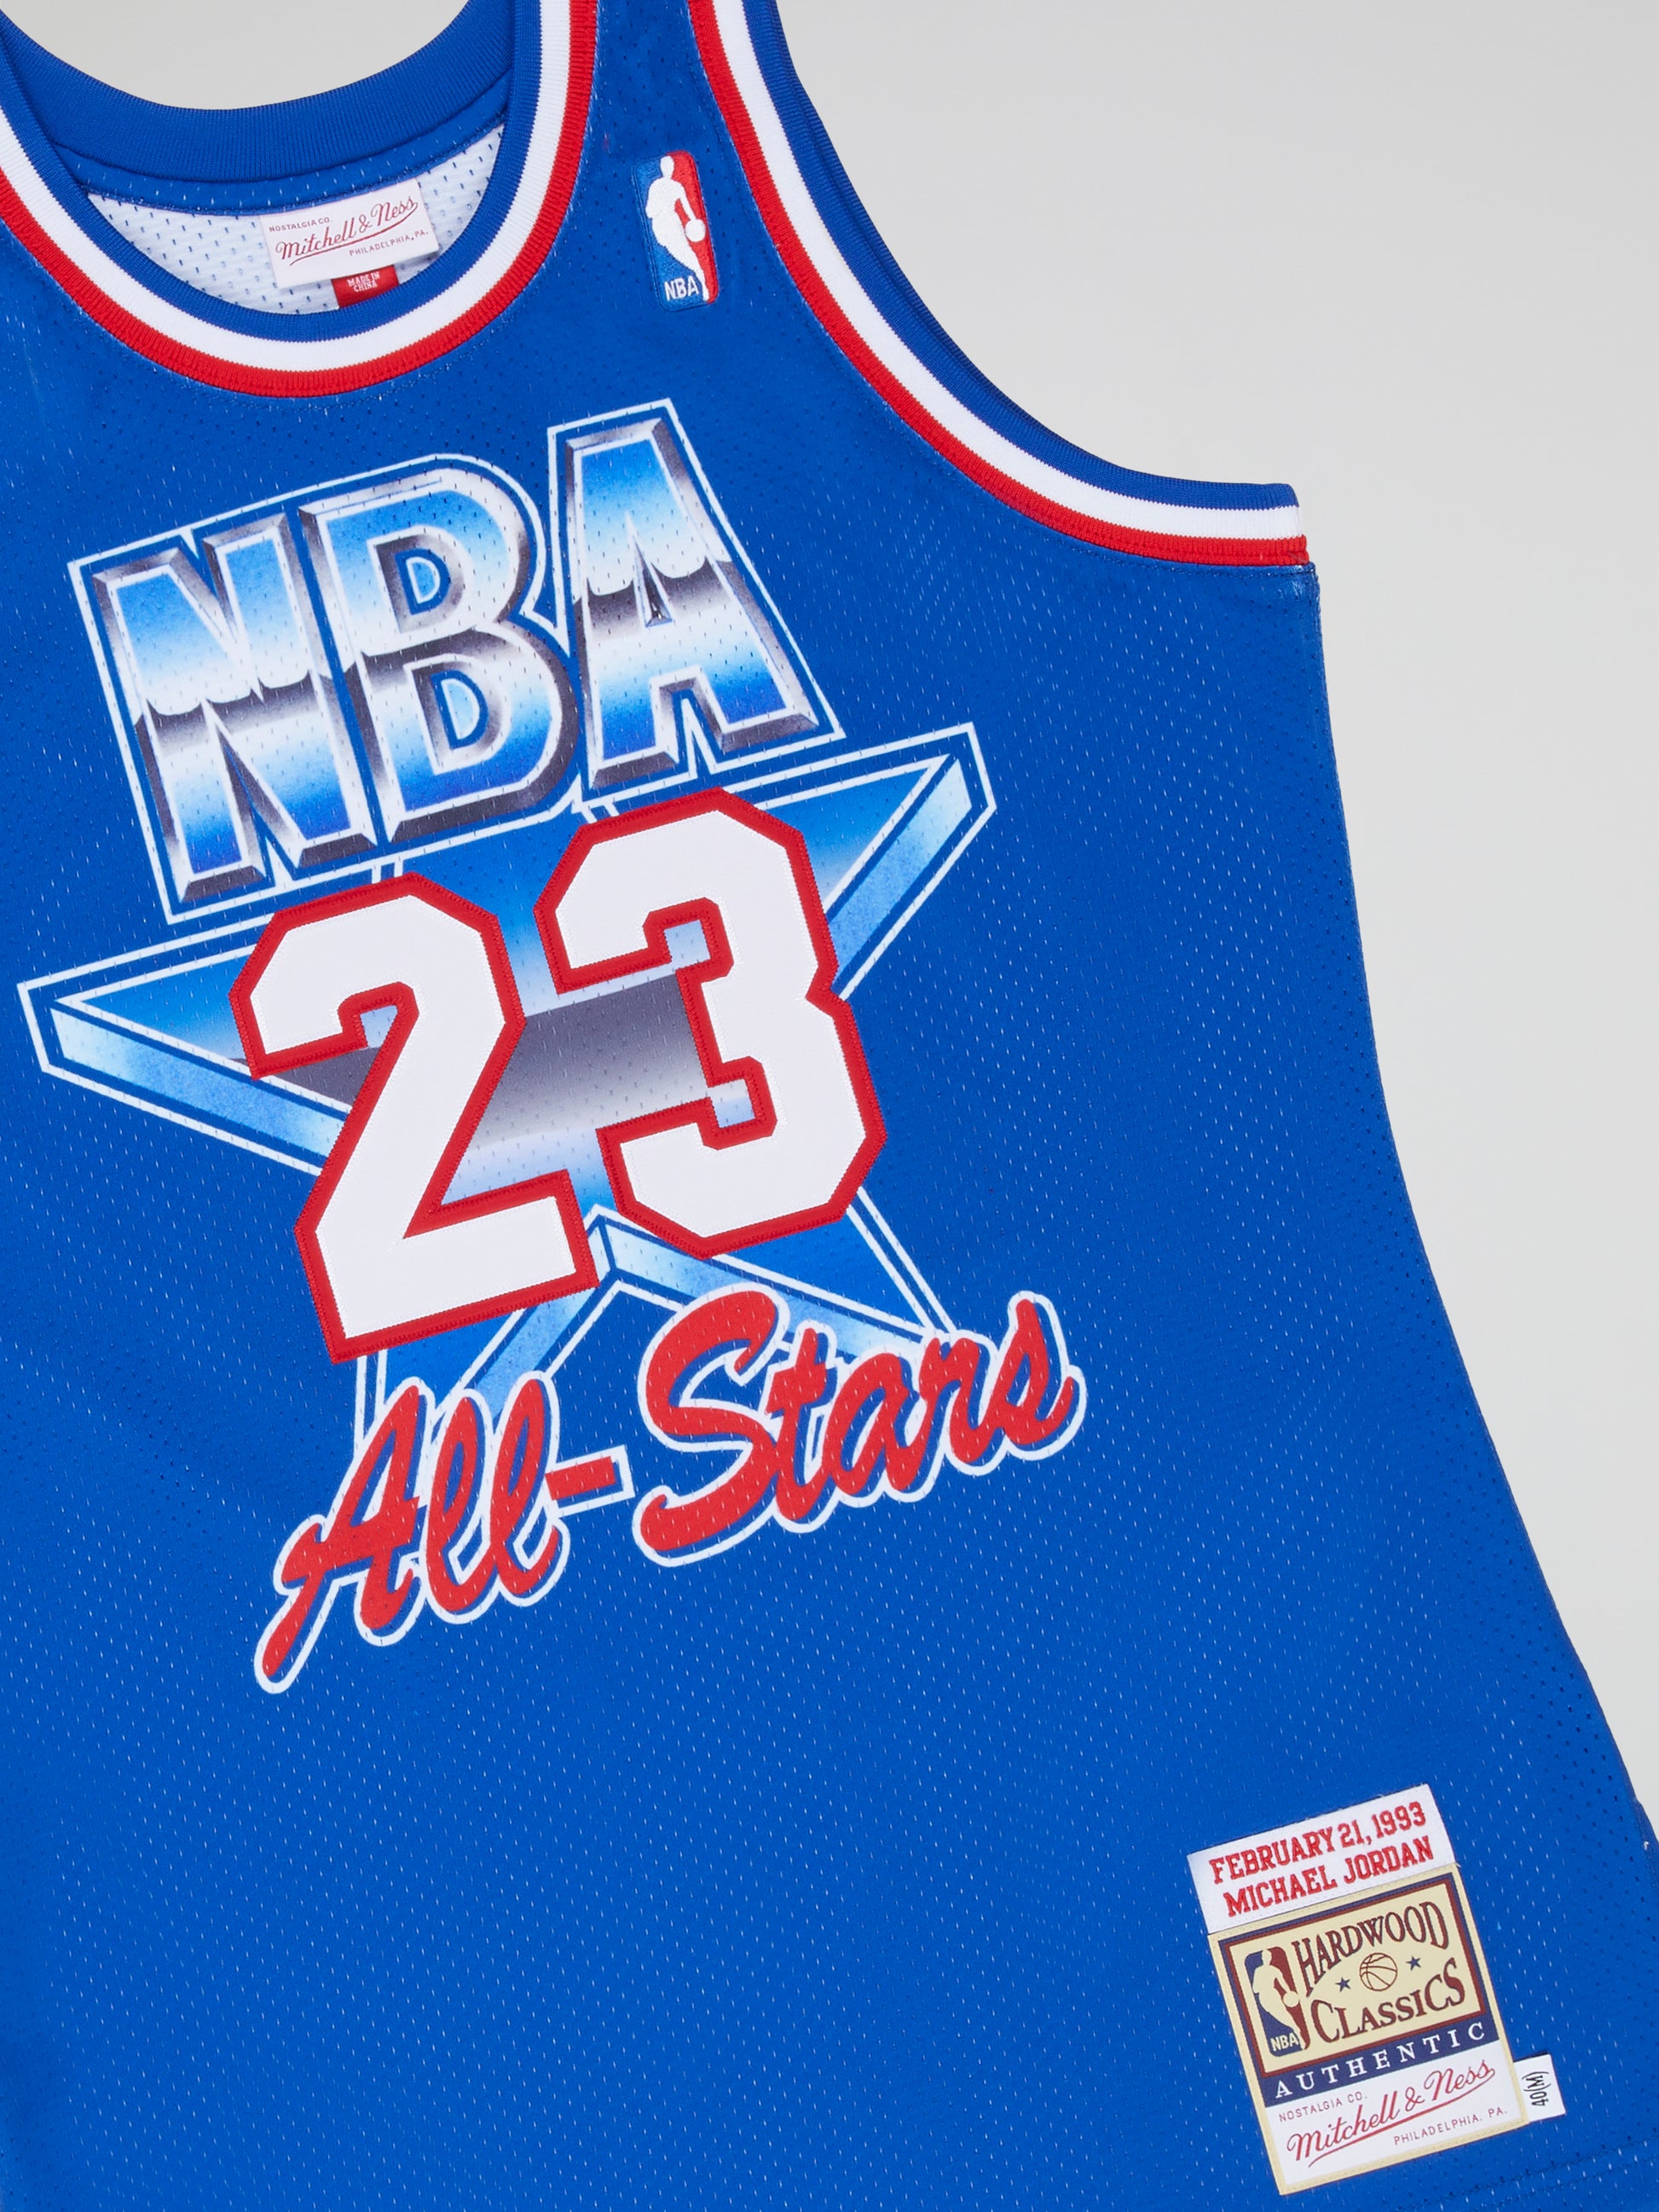 Mitchell & Ness All Star East '93 Michael Jordan Authentic Jersey Shirt - Blue, Size M by Sneaker Politics